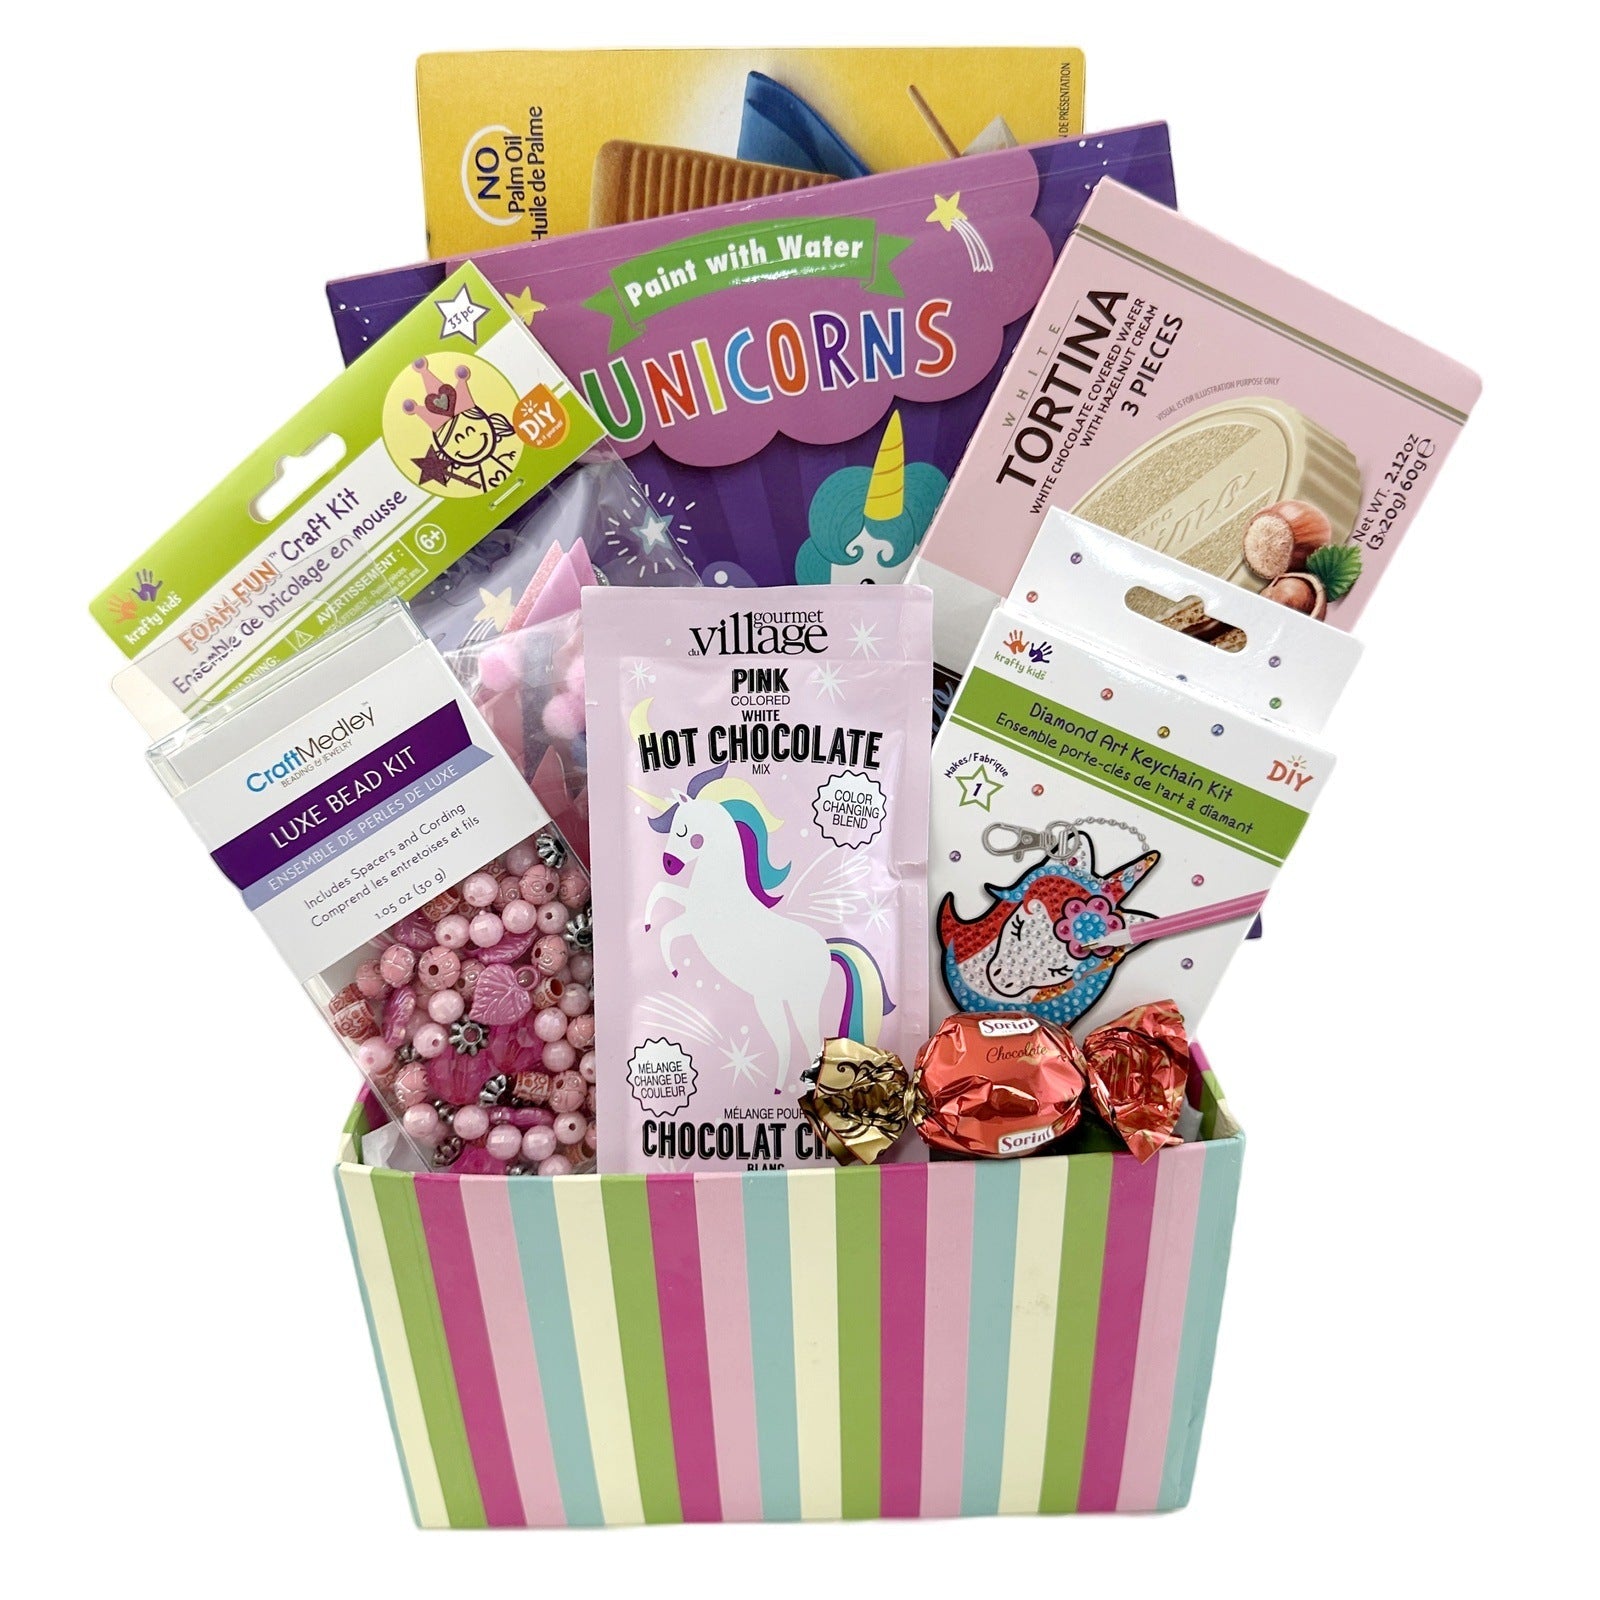 Easter Girls Gift Baskets – Disney Princess Themed Kids Gift - Import It All